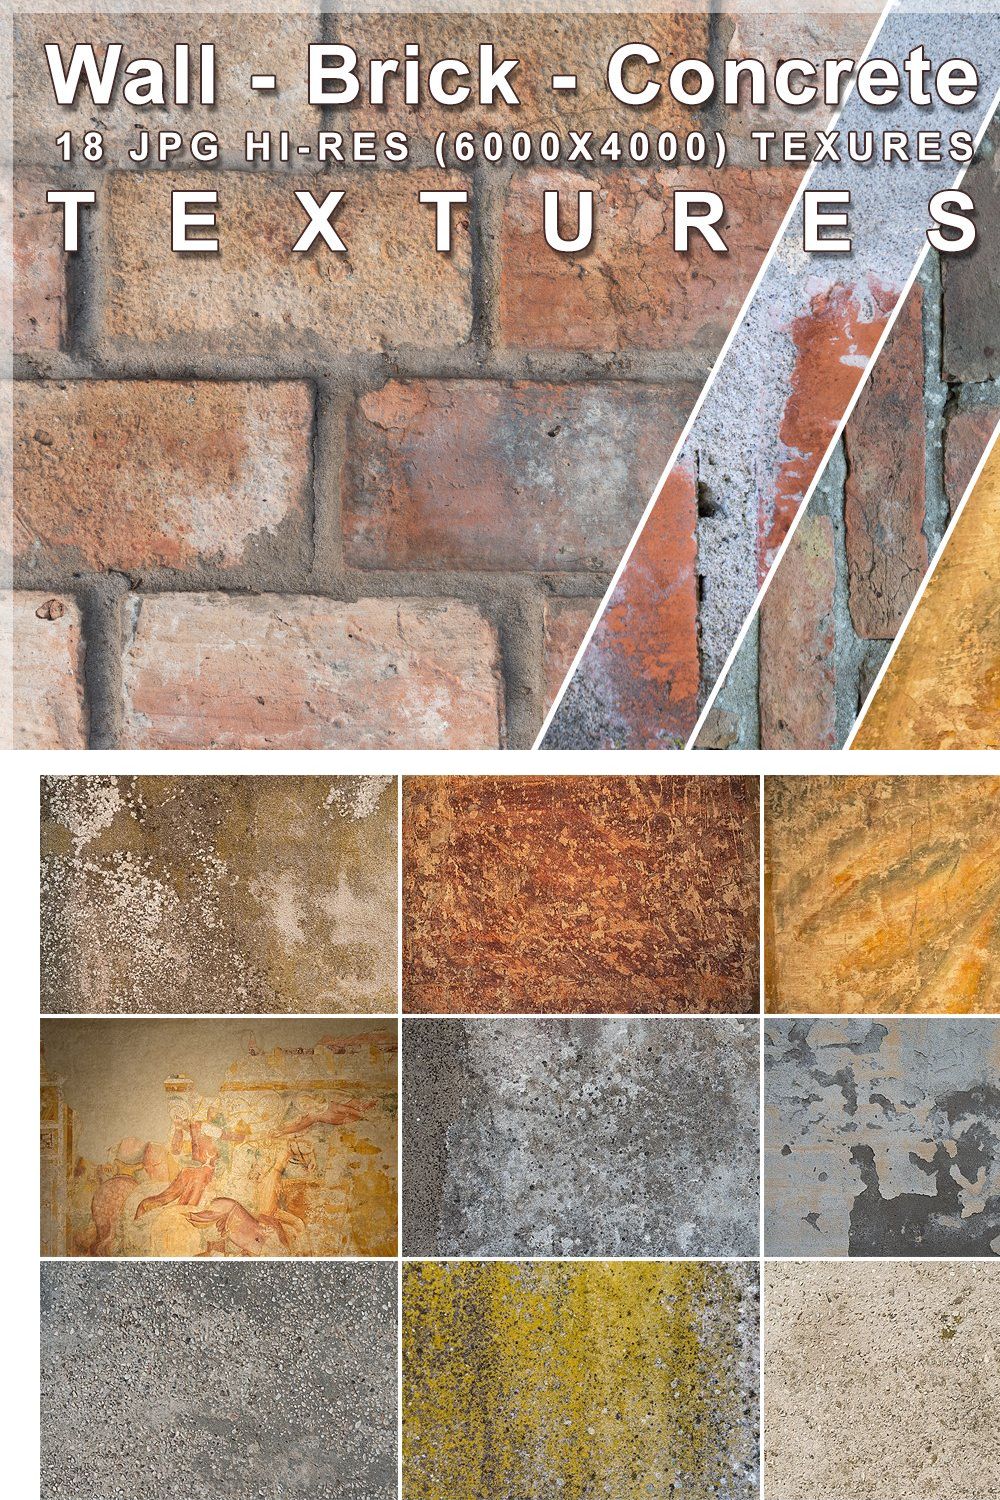 Wall - Brick - Concrete textures pinterest preview image.